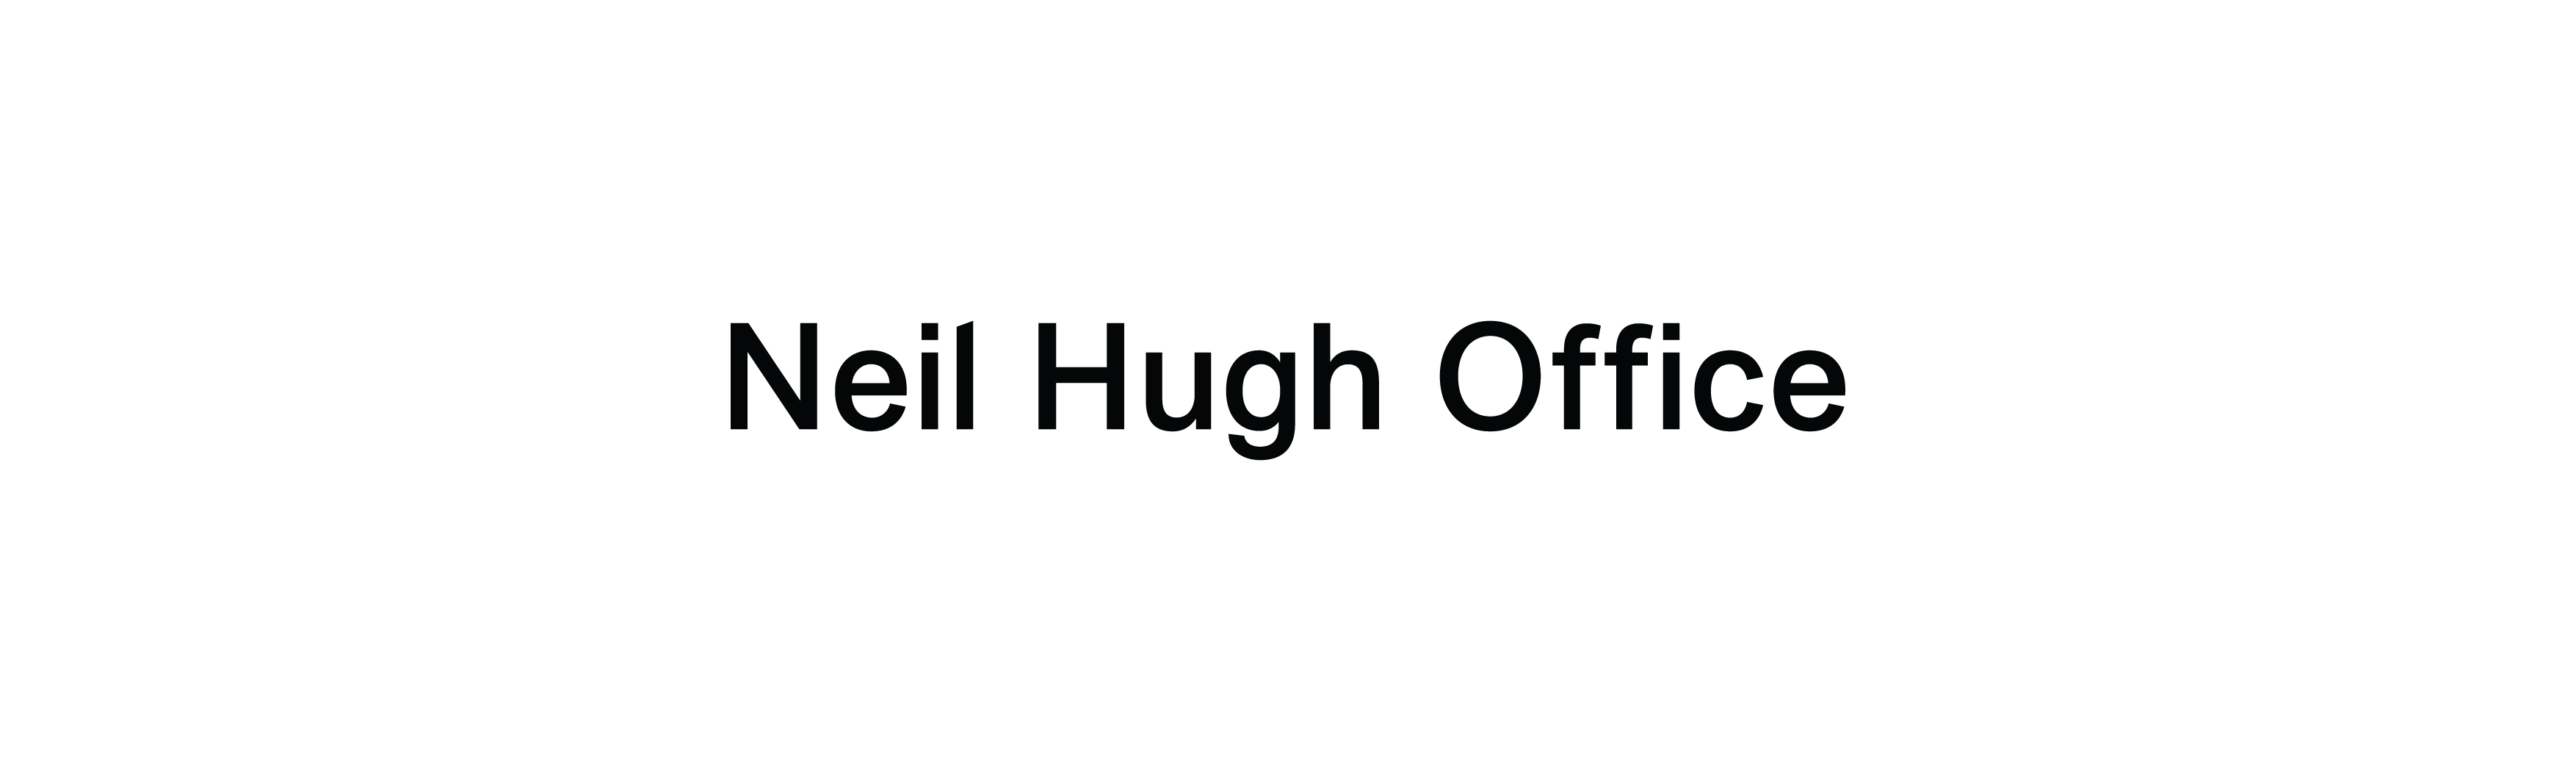 Neil Hugh Office